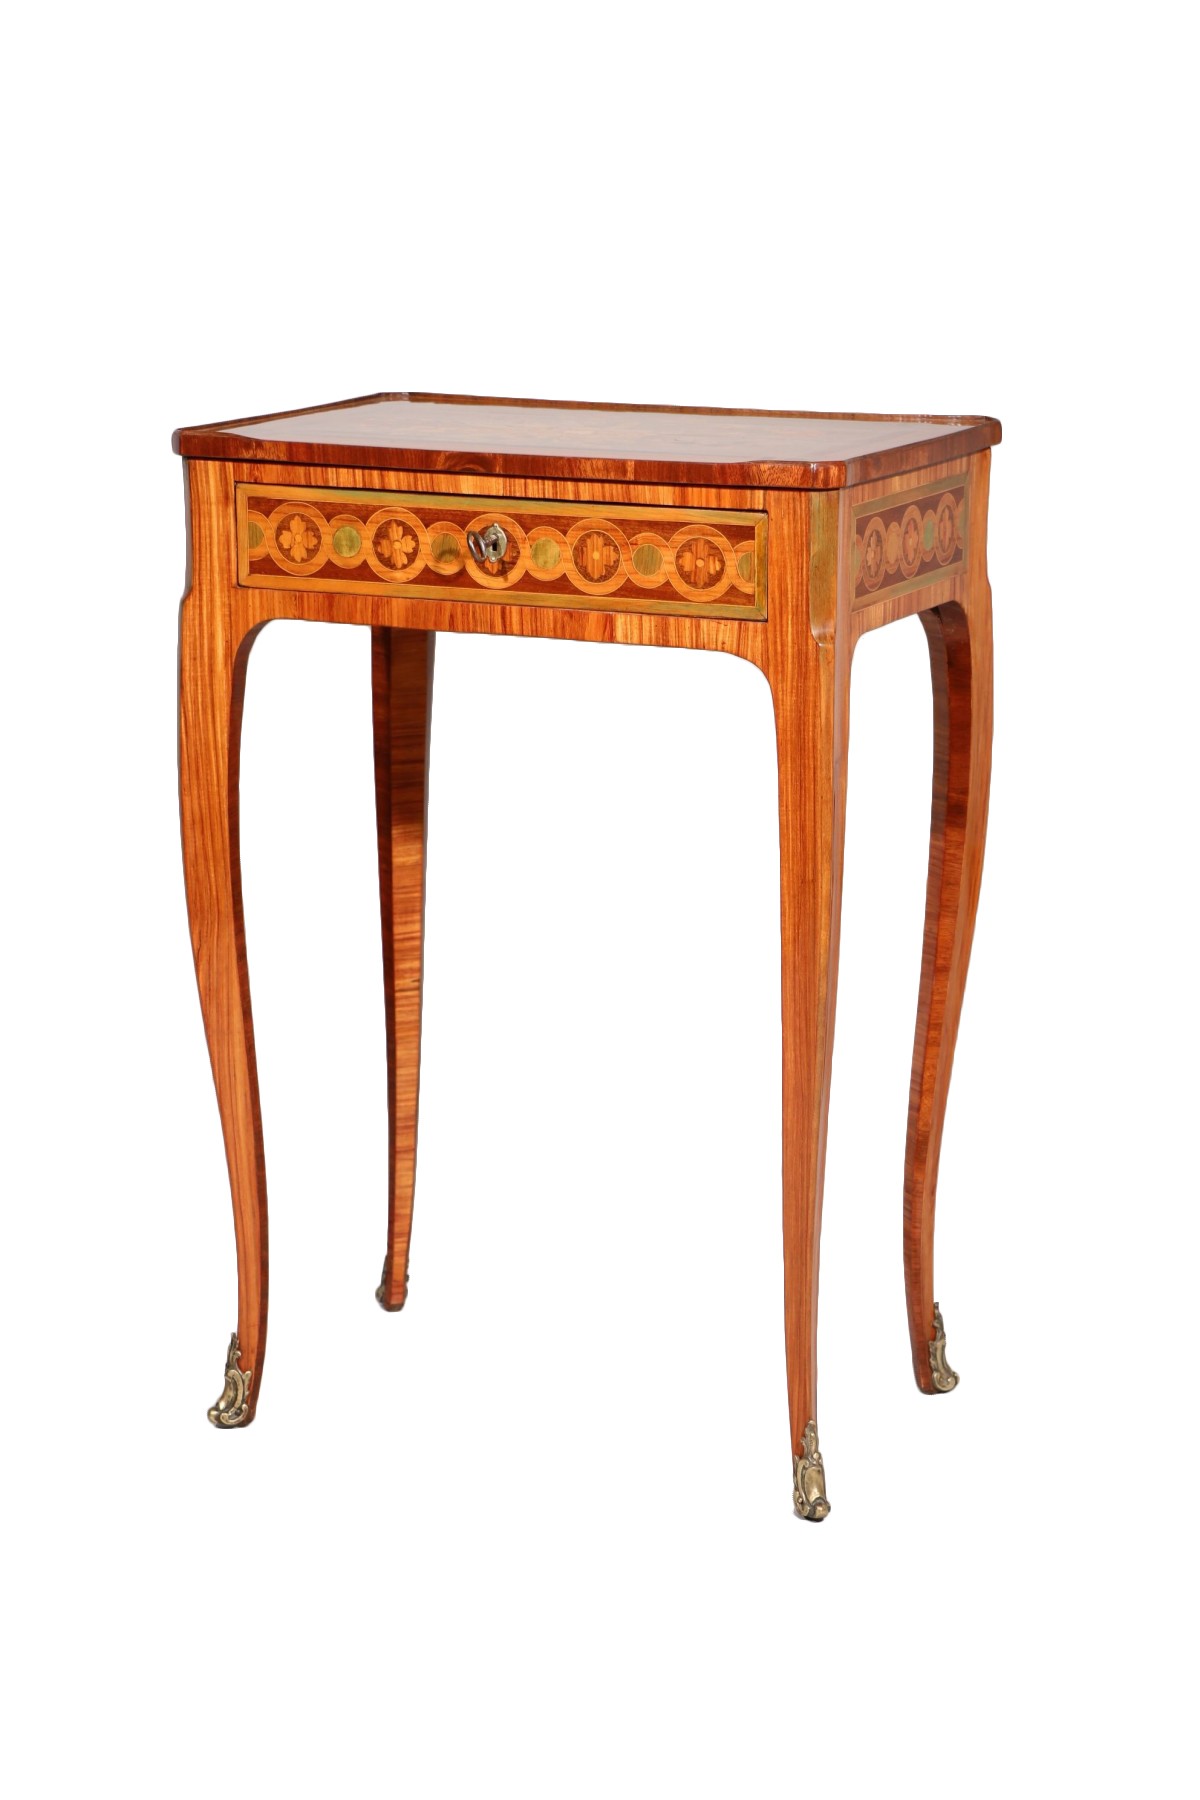 Petite table marquetée estampillée Nicolas Petit - XVIIIe siècle - N.89939